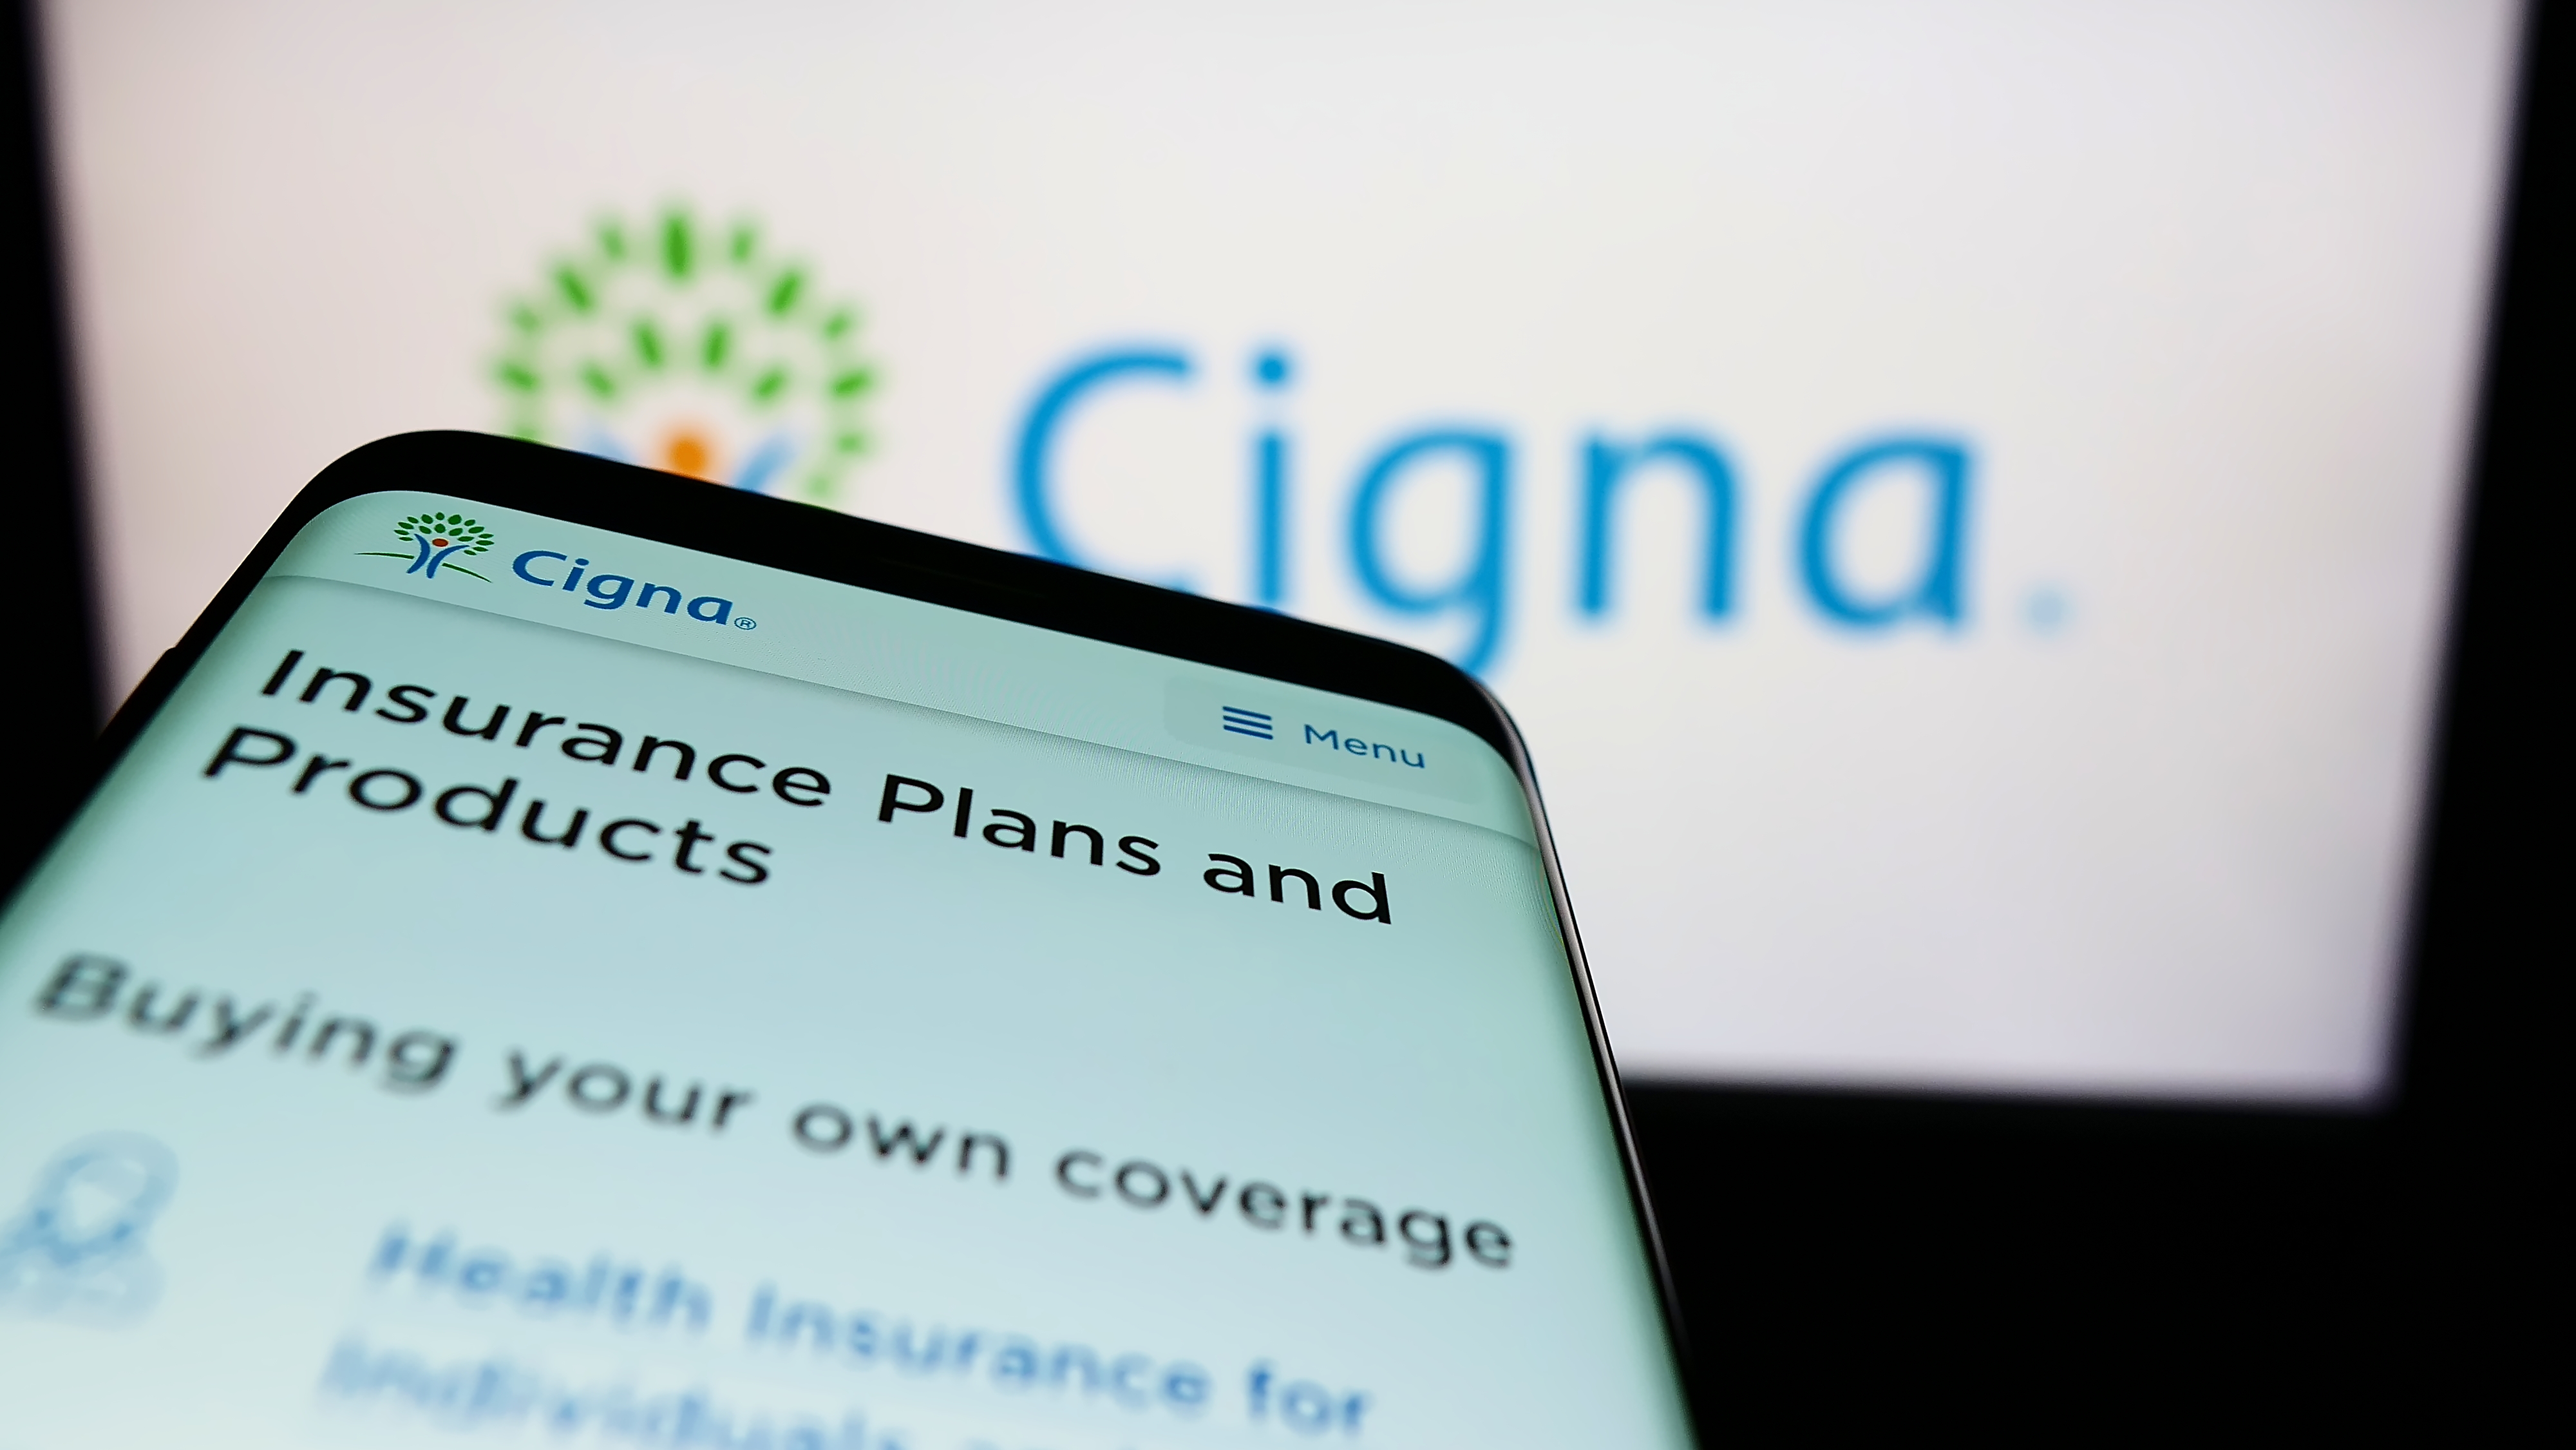 Cigna Class Action Lawsuit Alleges Health Insurer Denied Thousands of